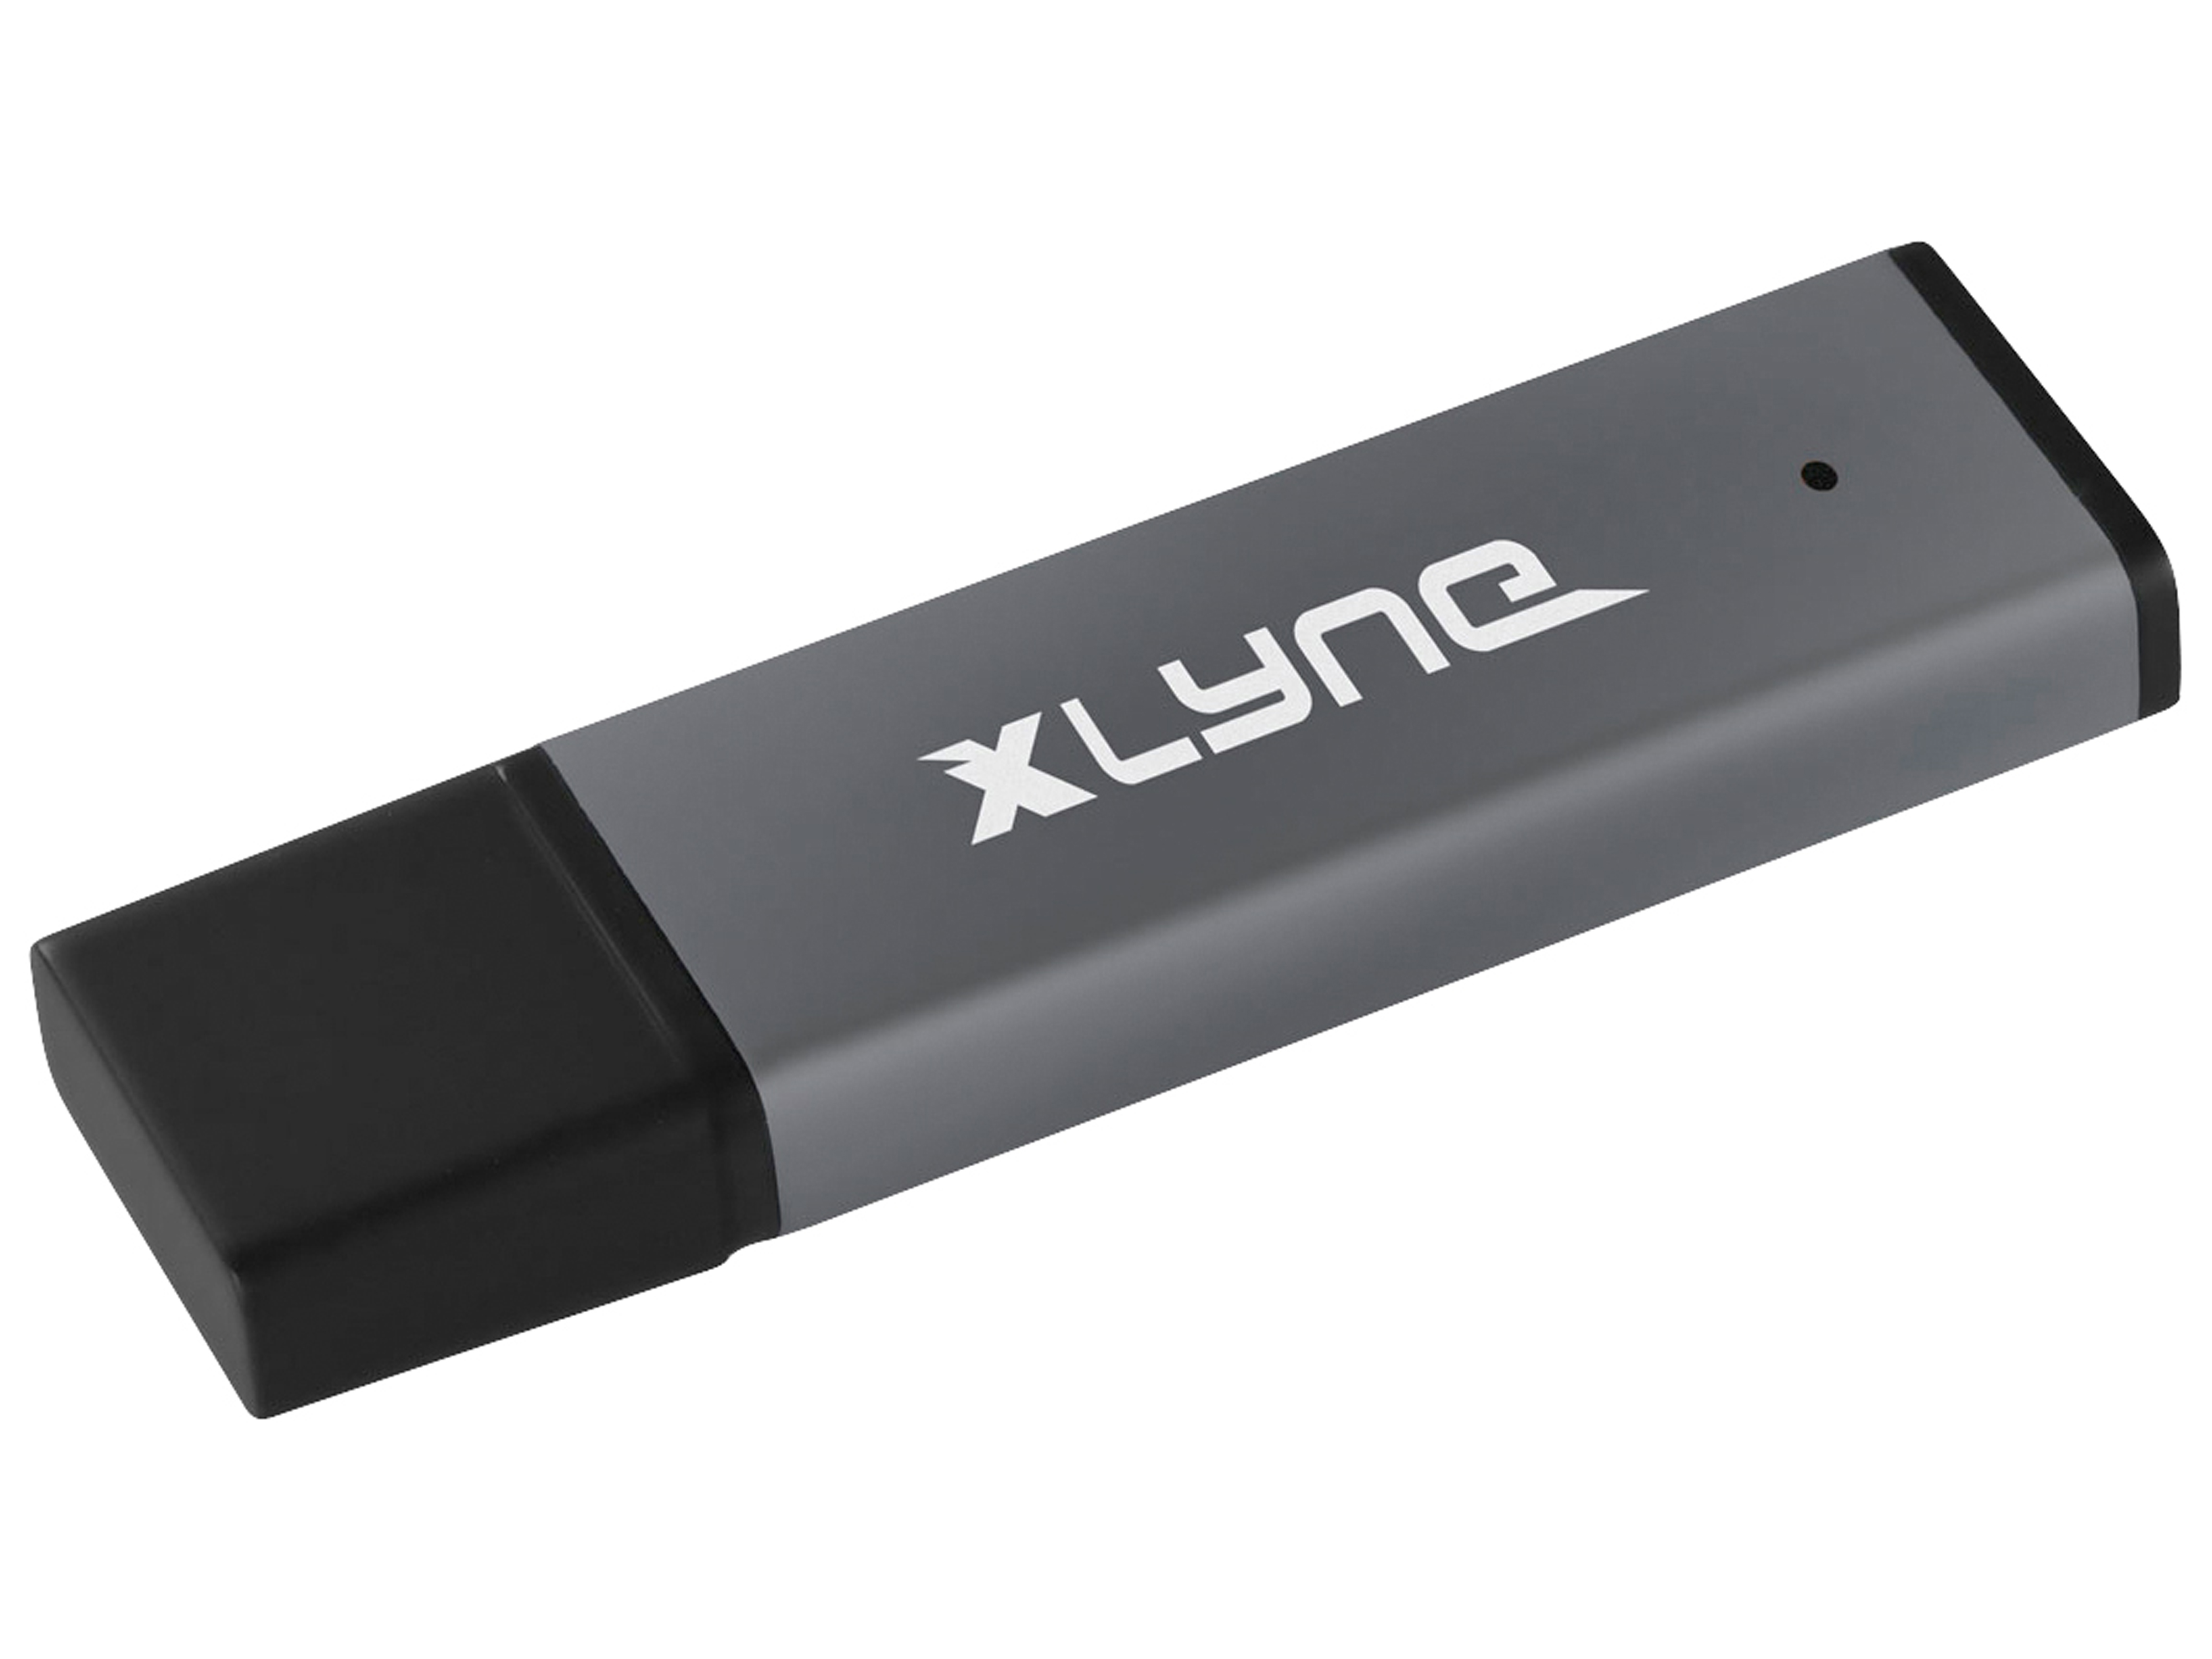 XLYNE USB-Stick Alu, USB 2.0, 64 GB